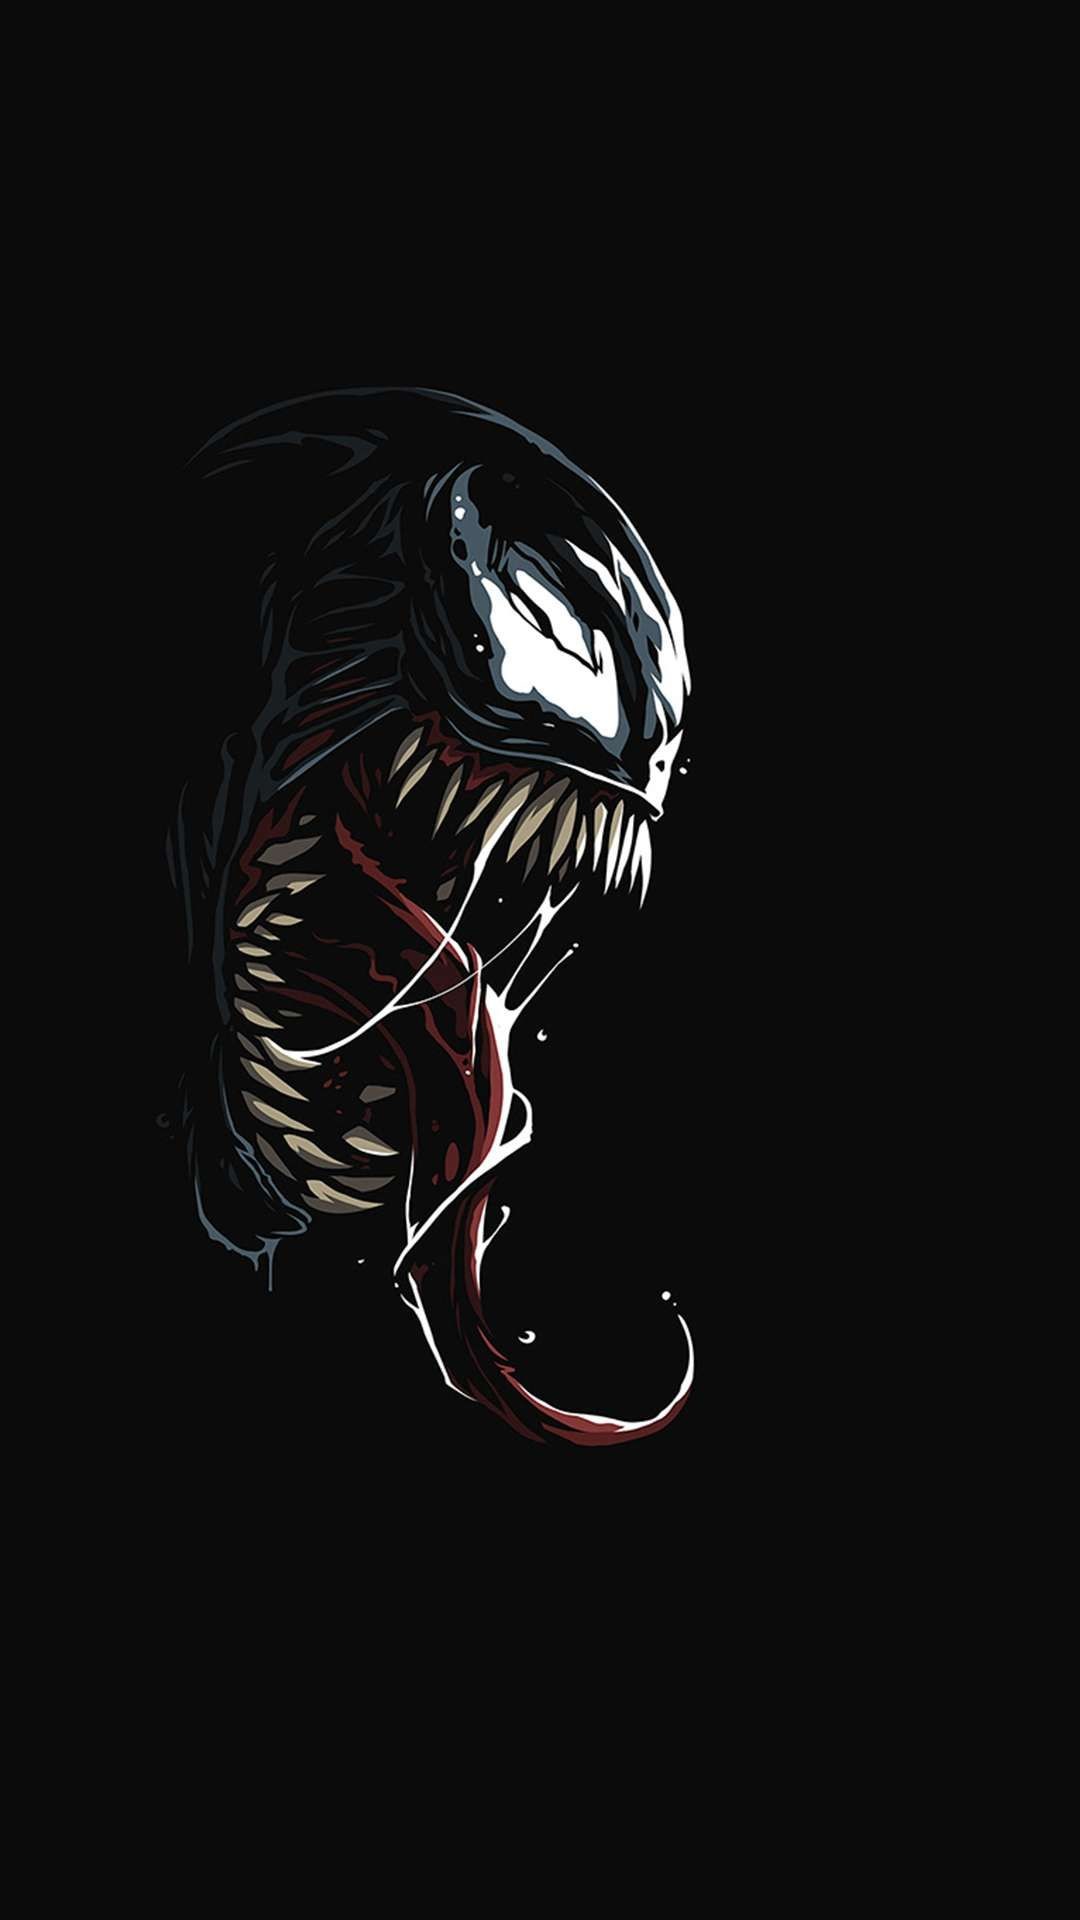 Venom Wallpaper APK for Android Download